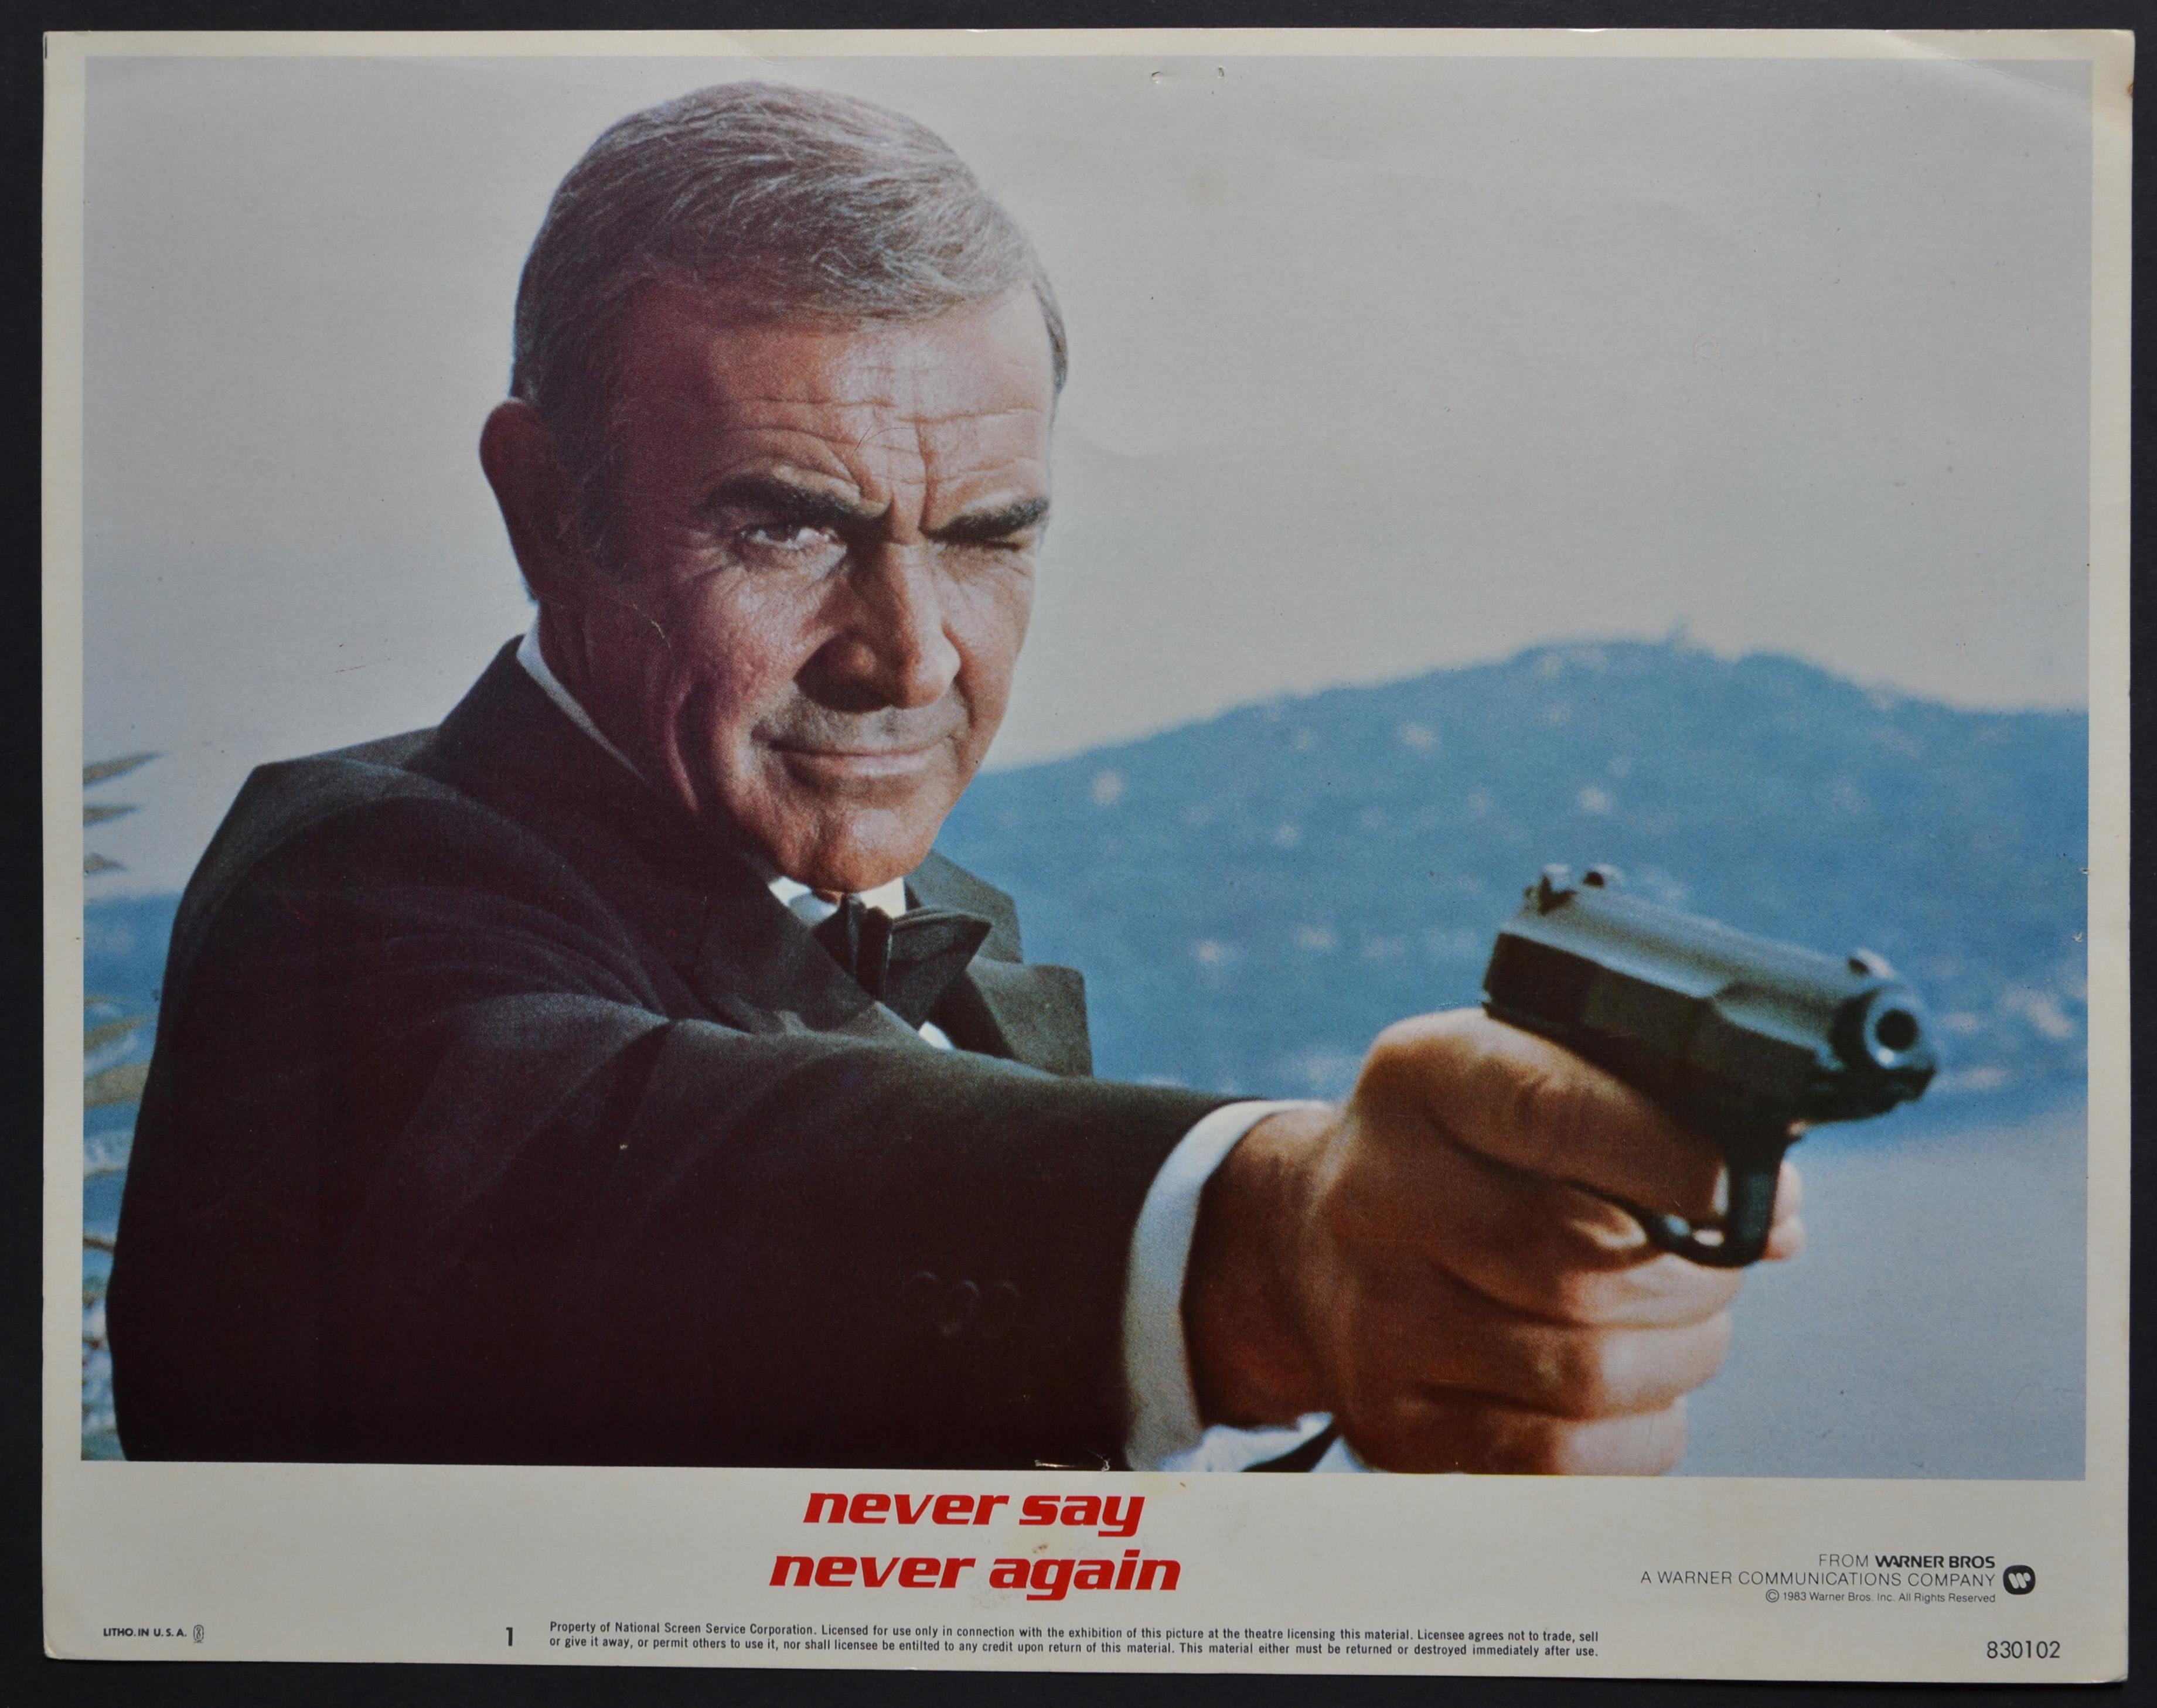 Unknown Interior Print - "James Bond 007 - Never say never again" Original Lobby Card, UK 1984